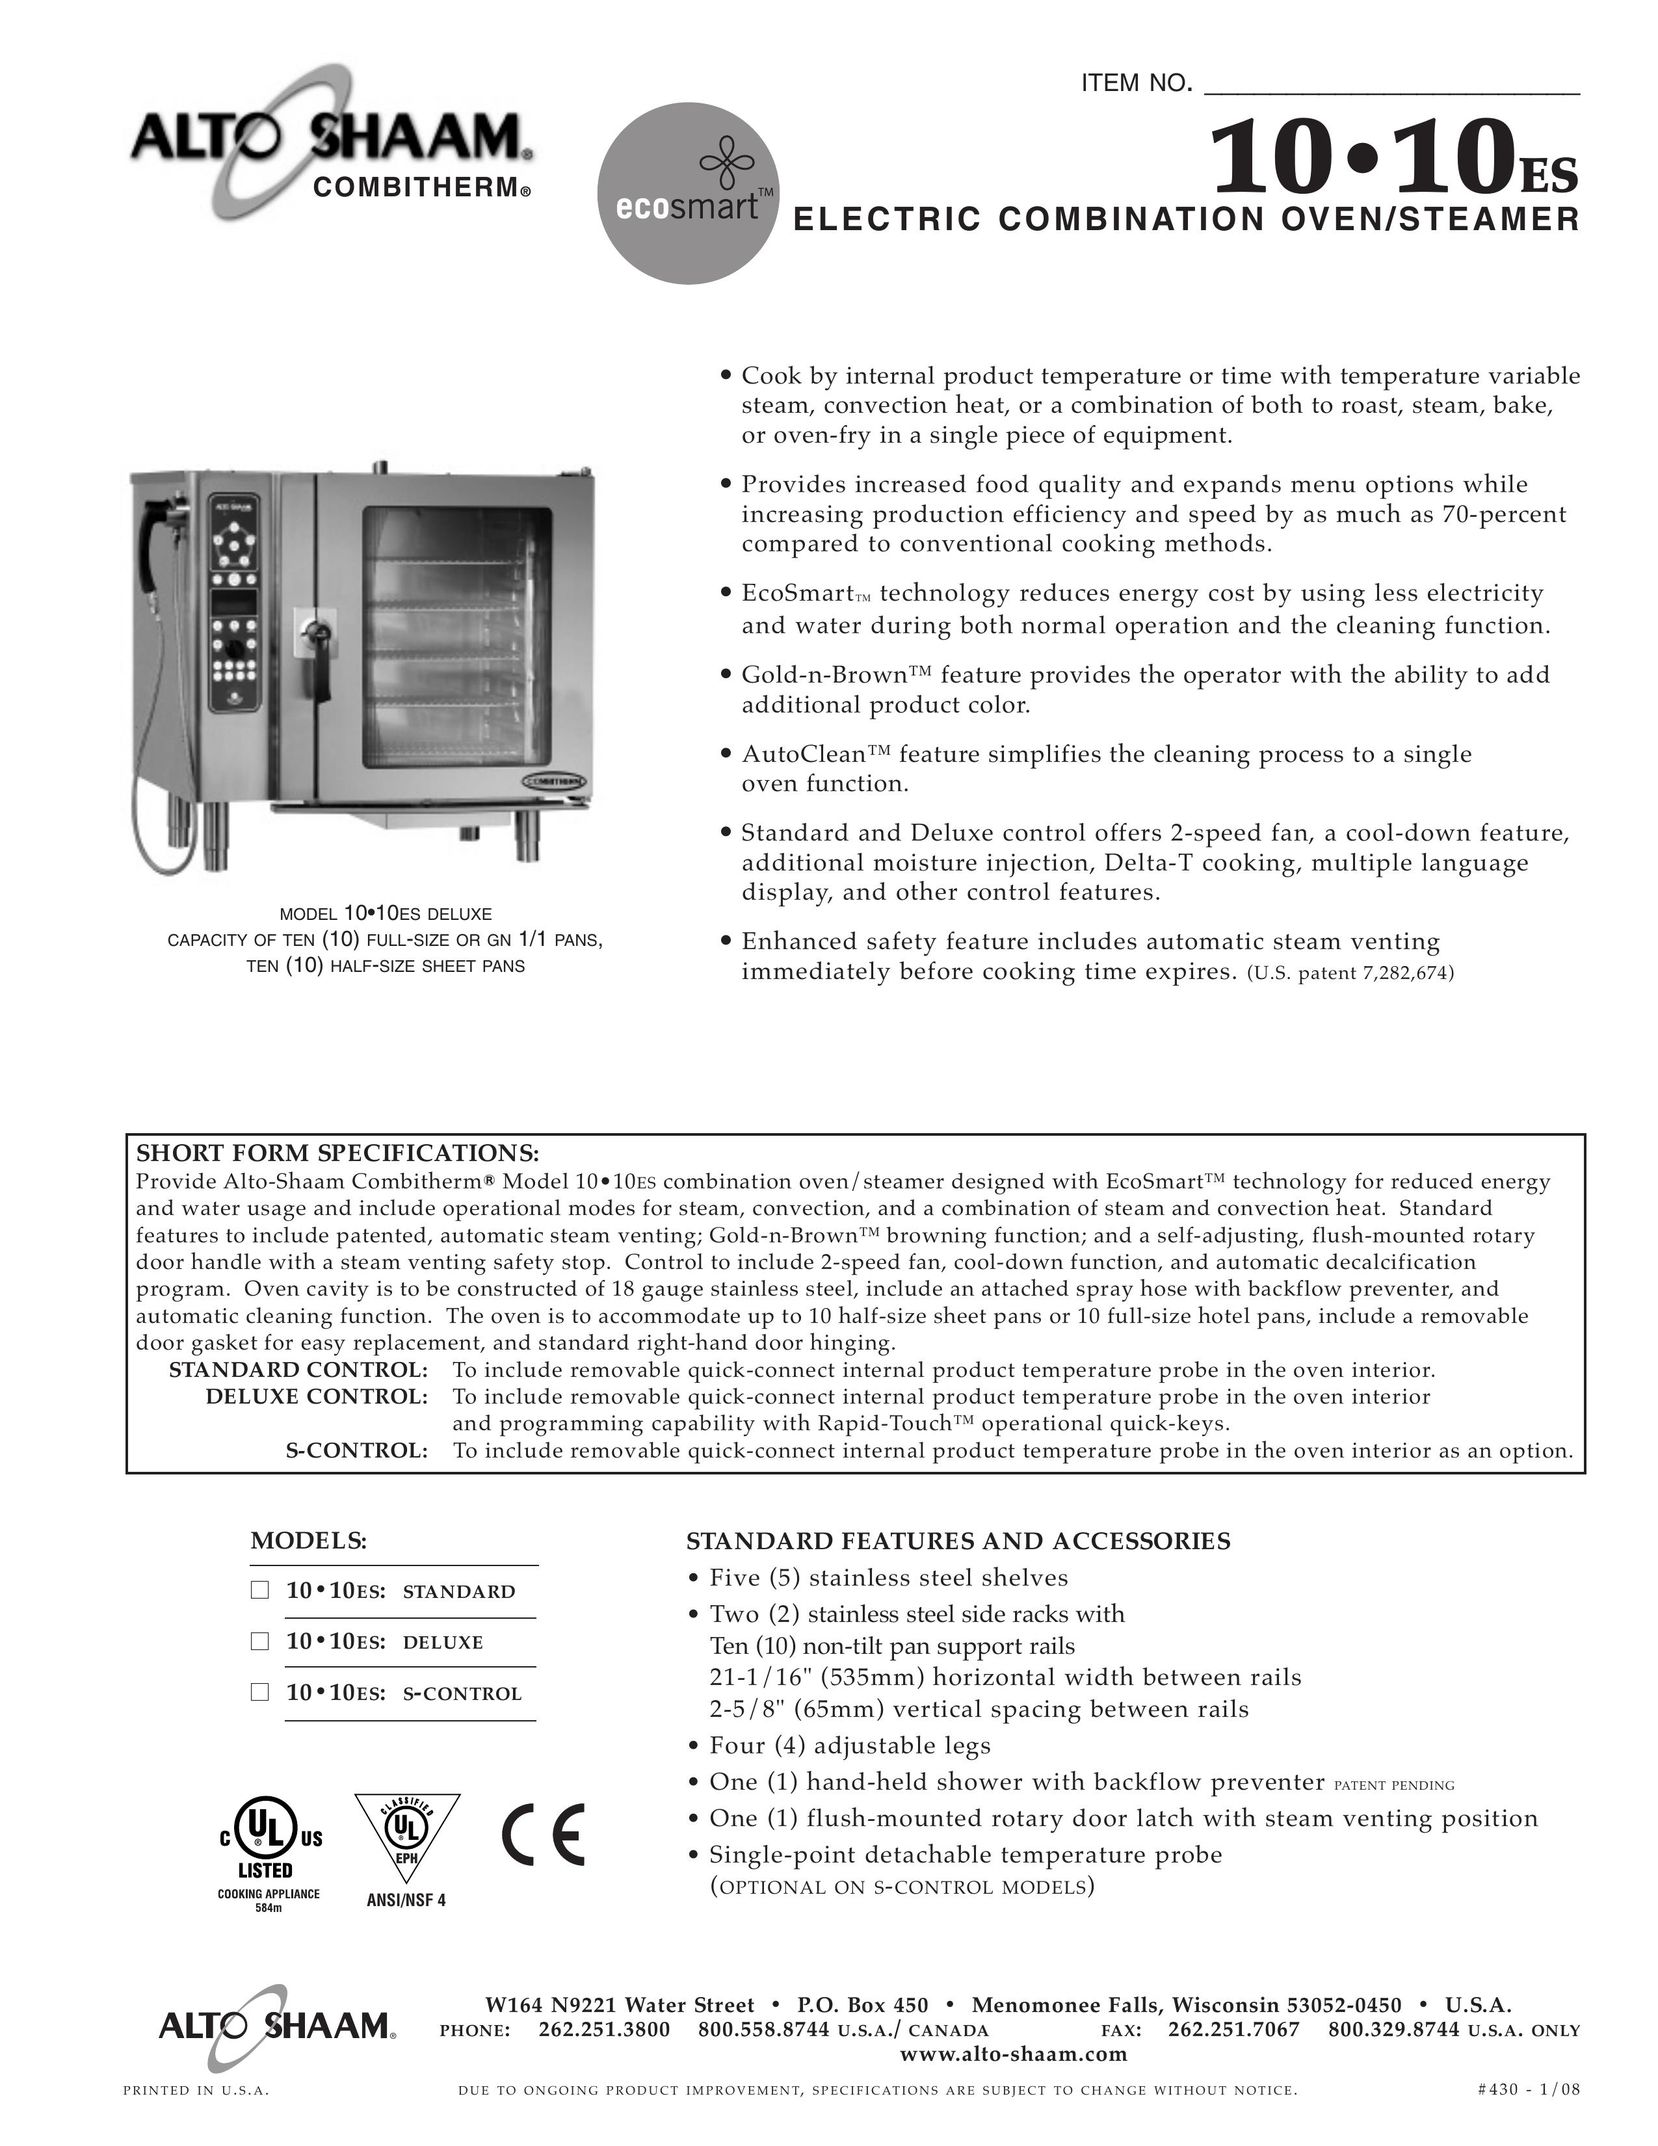 Alto-Shaam 10 10ES Oven User Manual